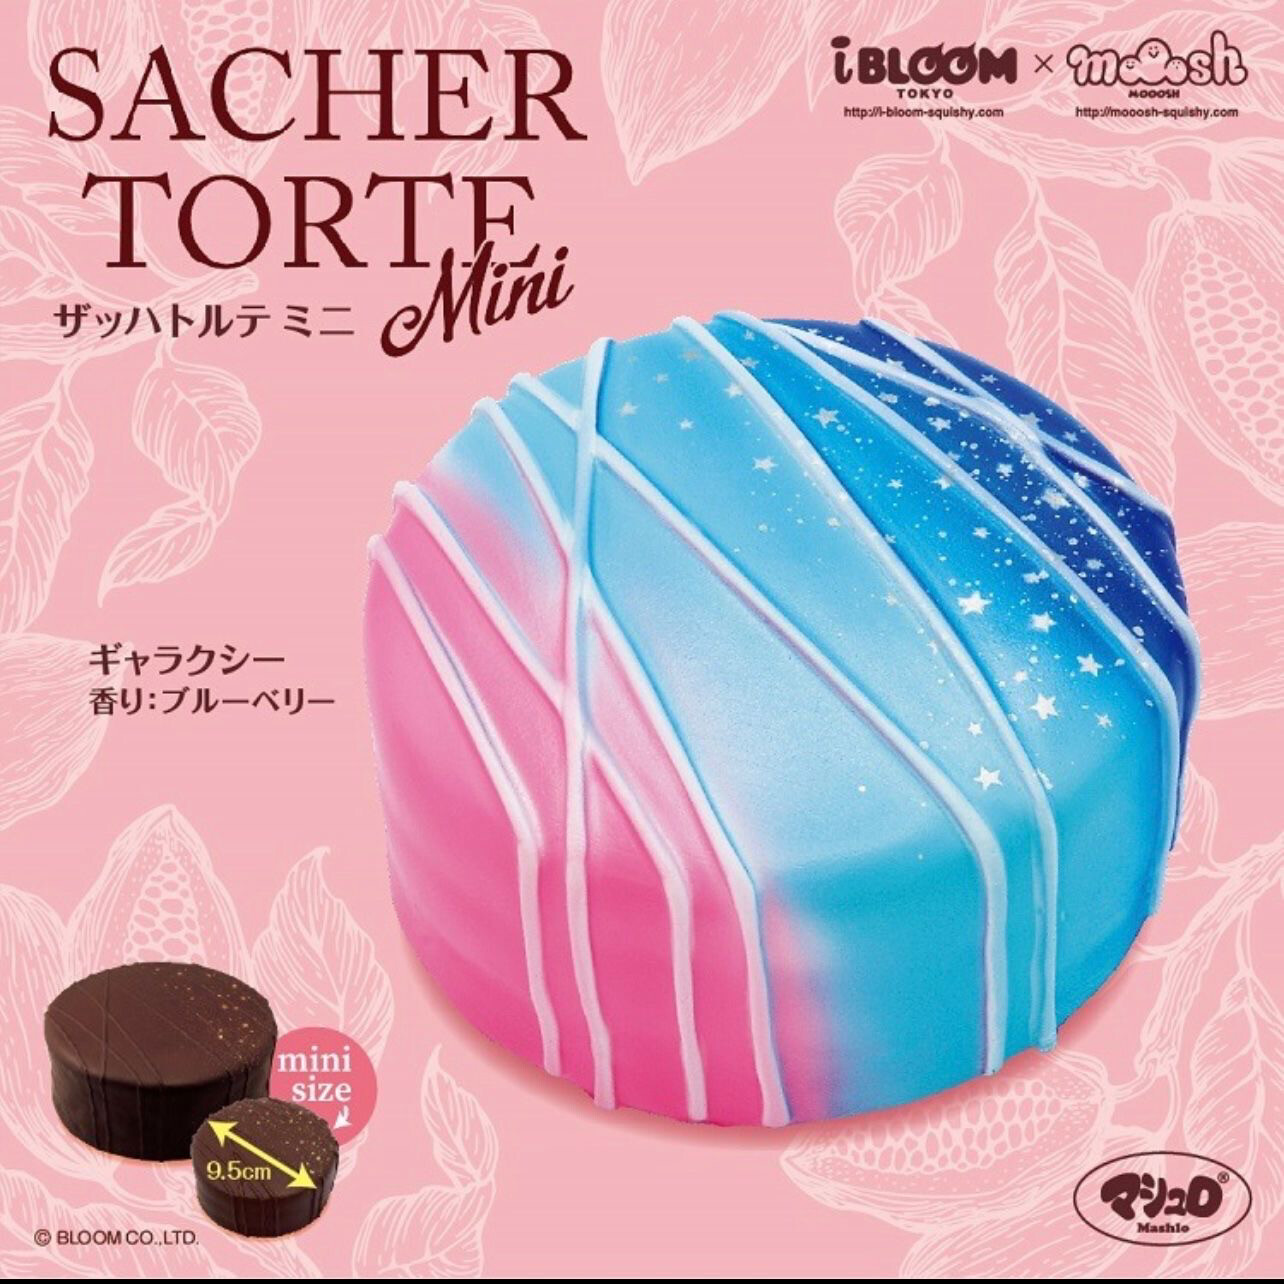 iBloom Sacher Torte Mini Squishy Toy - Galaxy (Medium)